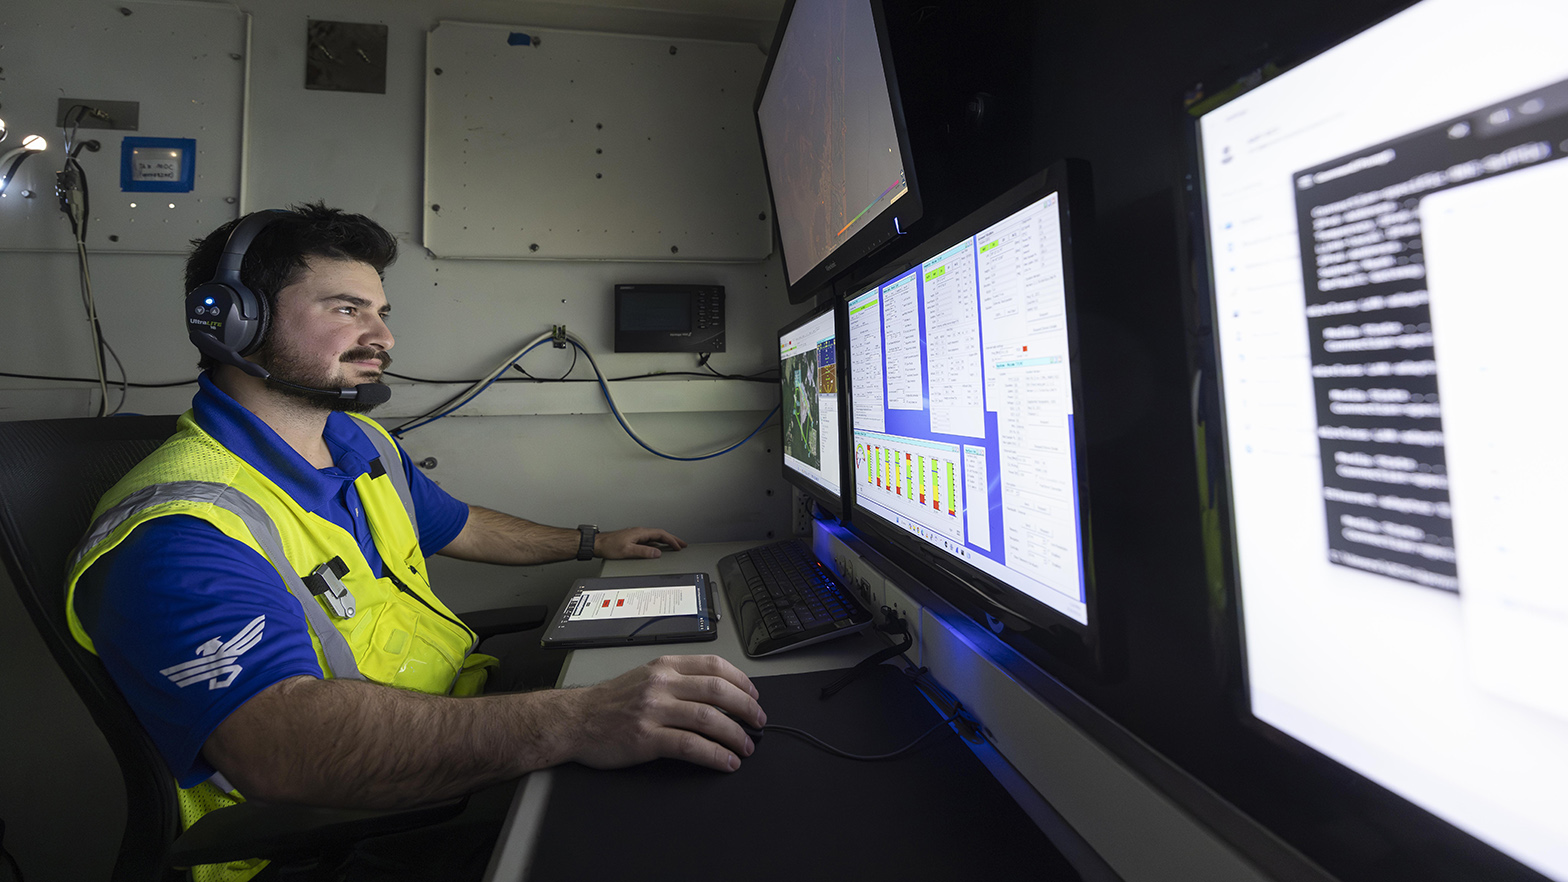 Andrew Giordano, pilot in command for AATI, monitors an AiRanger flight